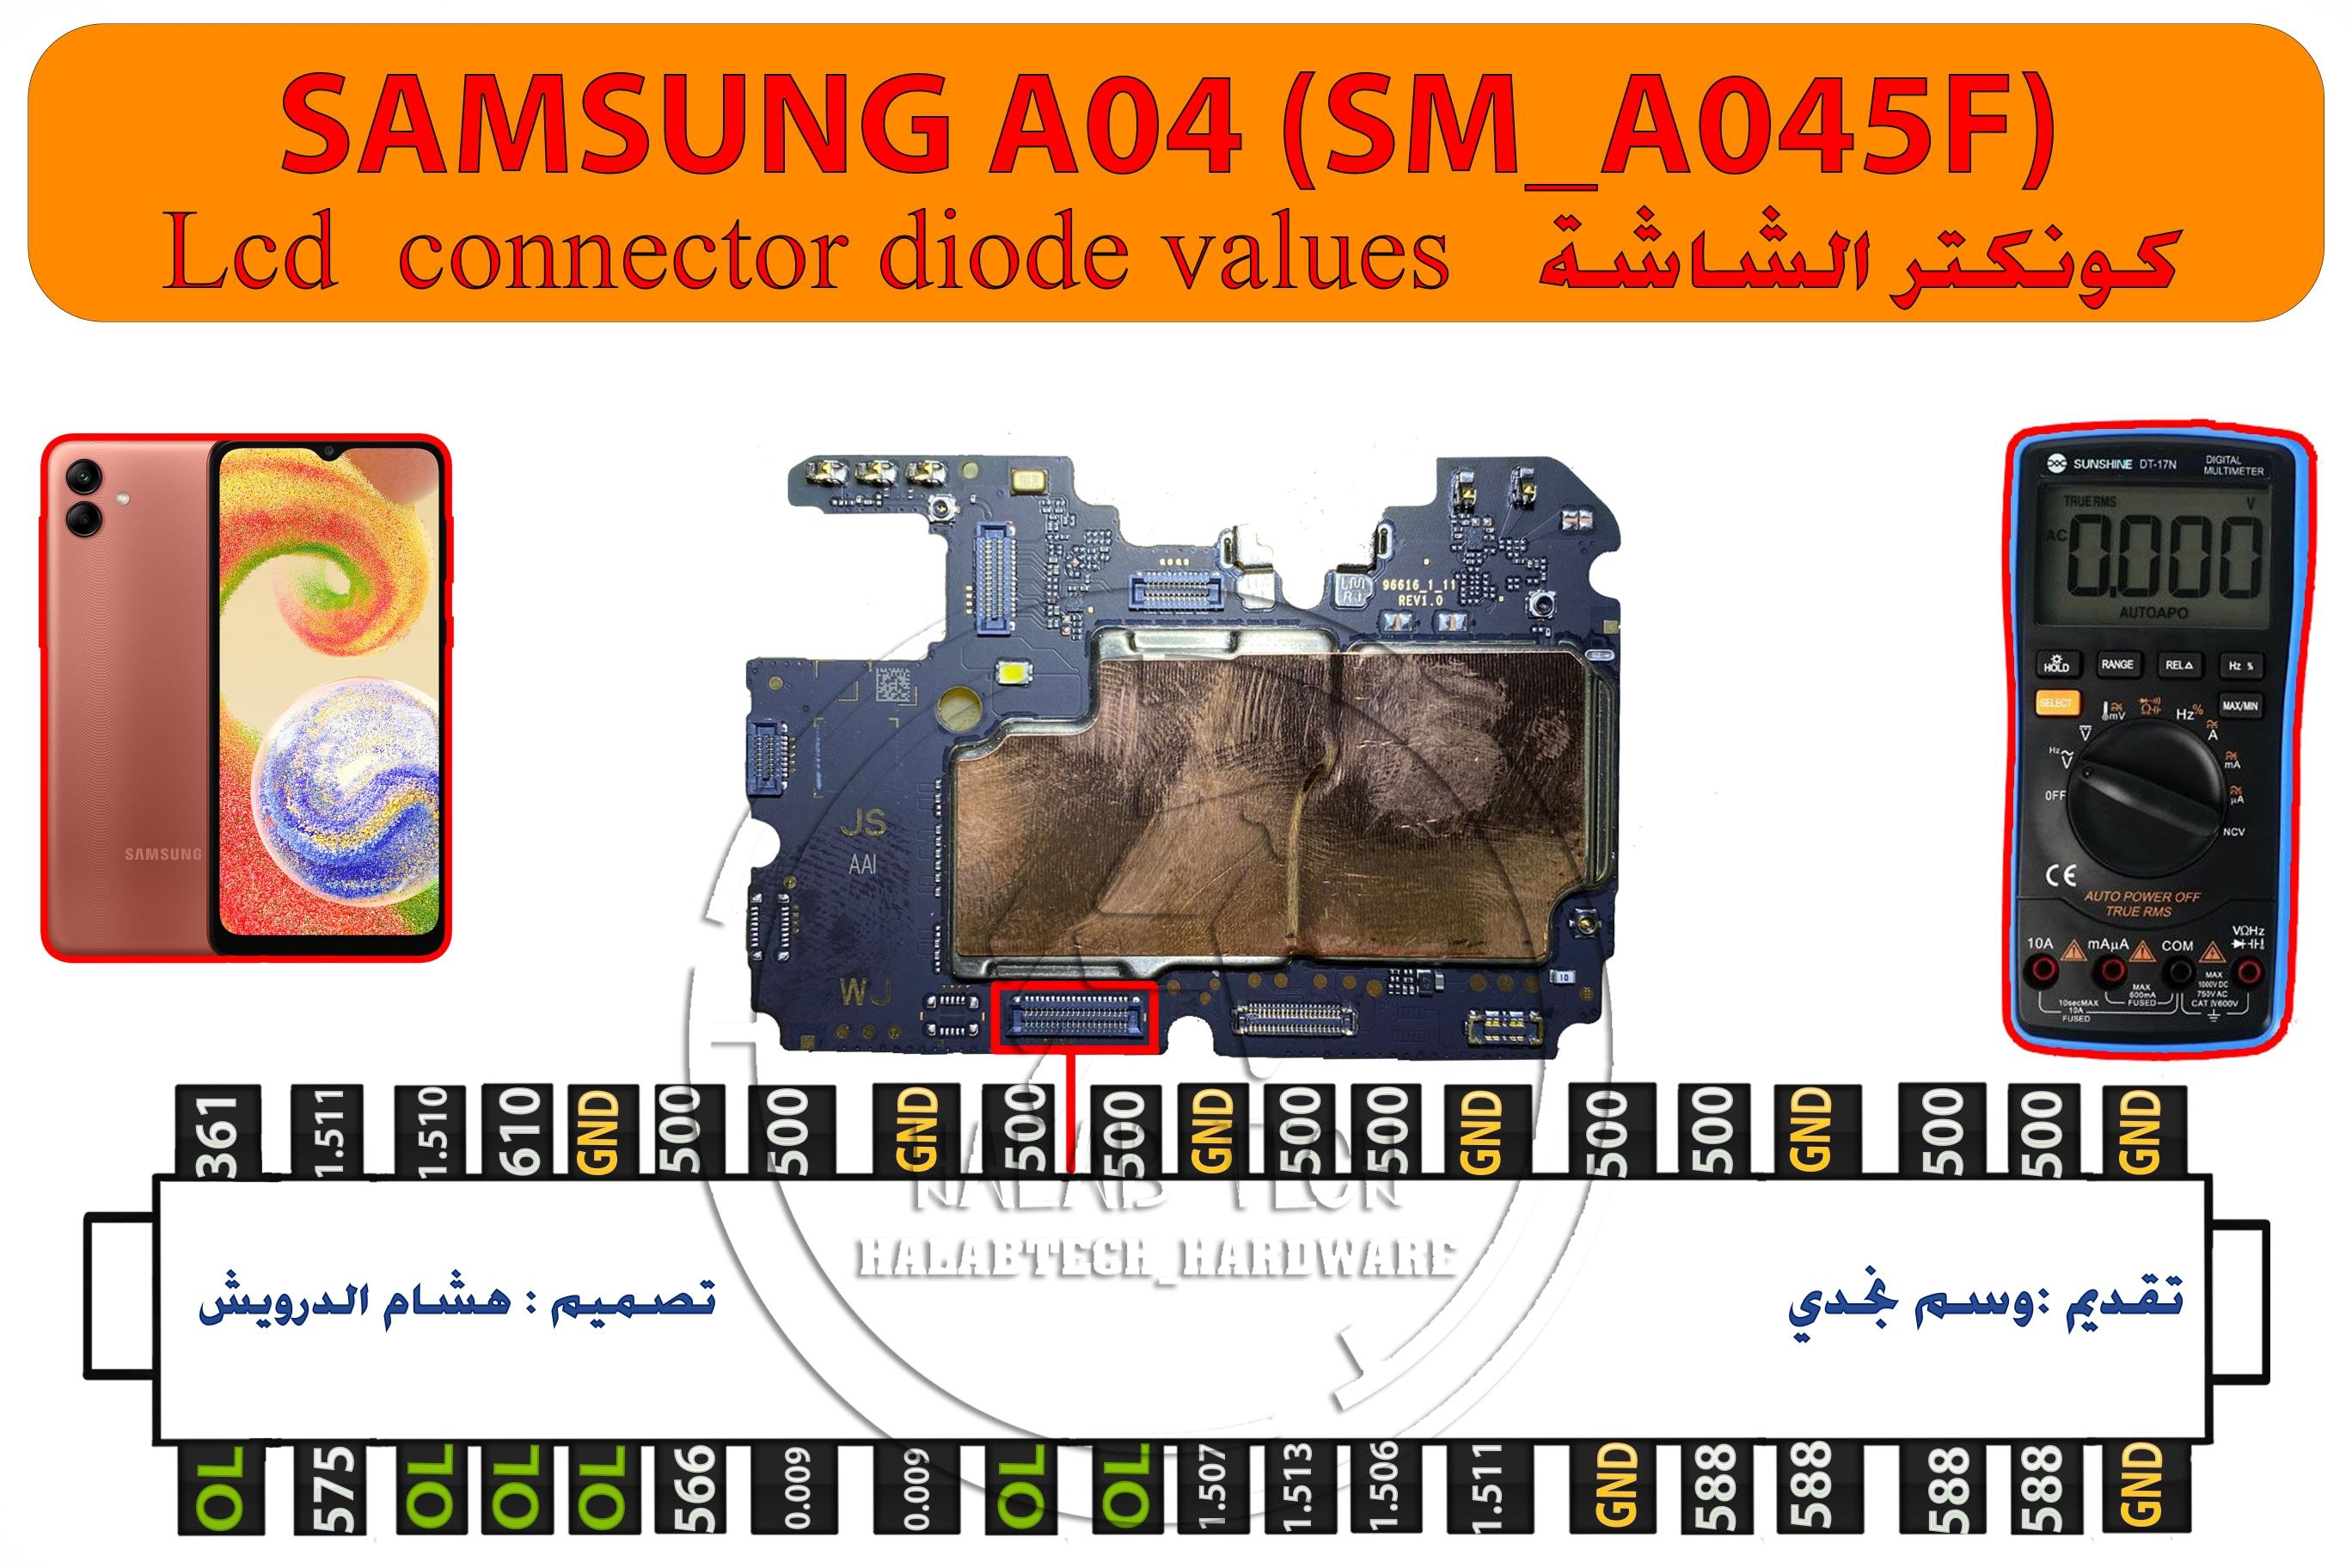 SamsungA04A045FLcdconnectordiodevalues.png.31f1497b22adc0676736d0e2df77e268.png